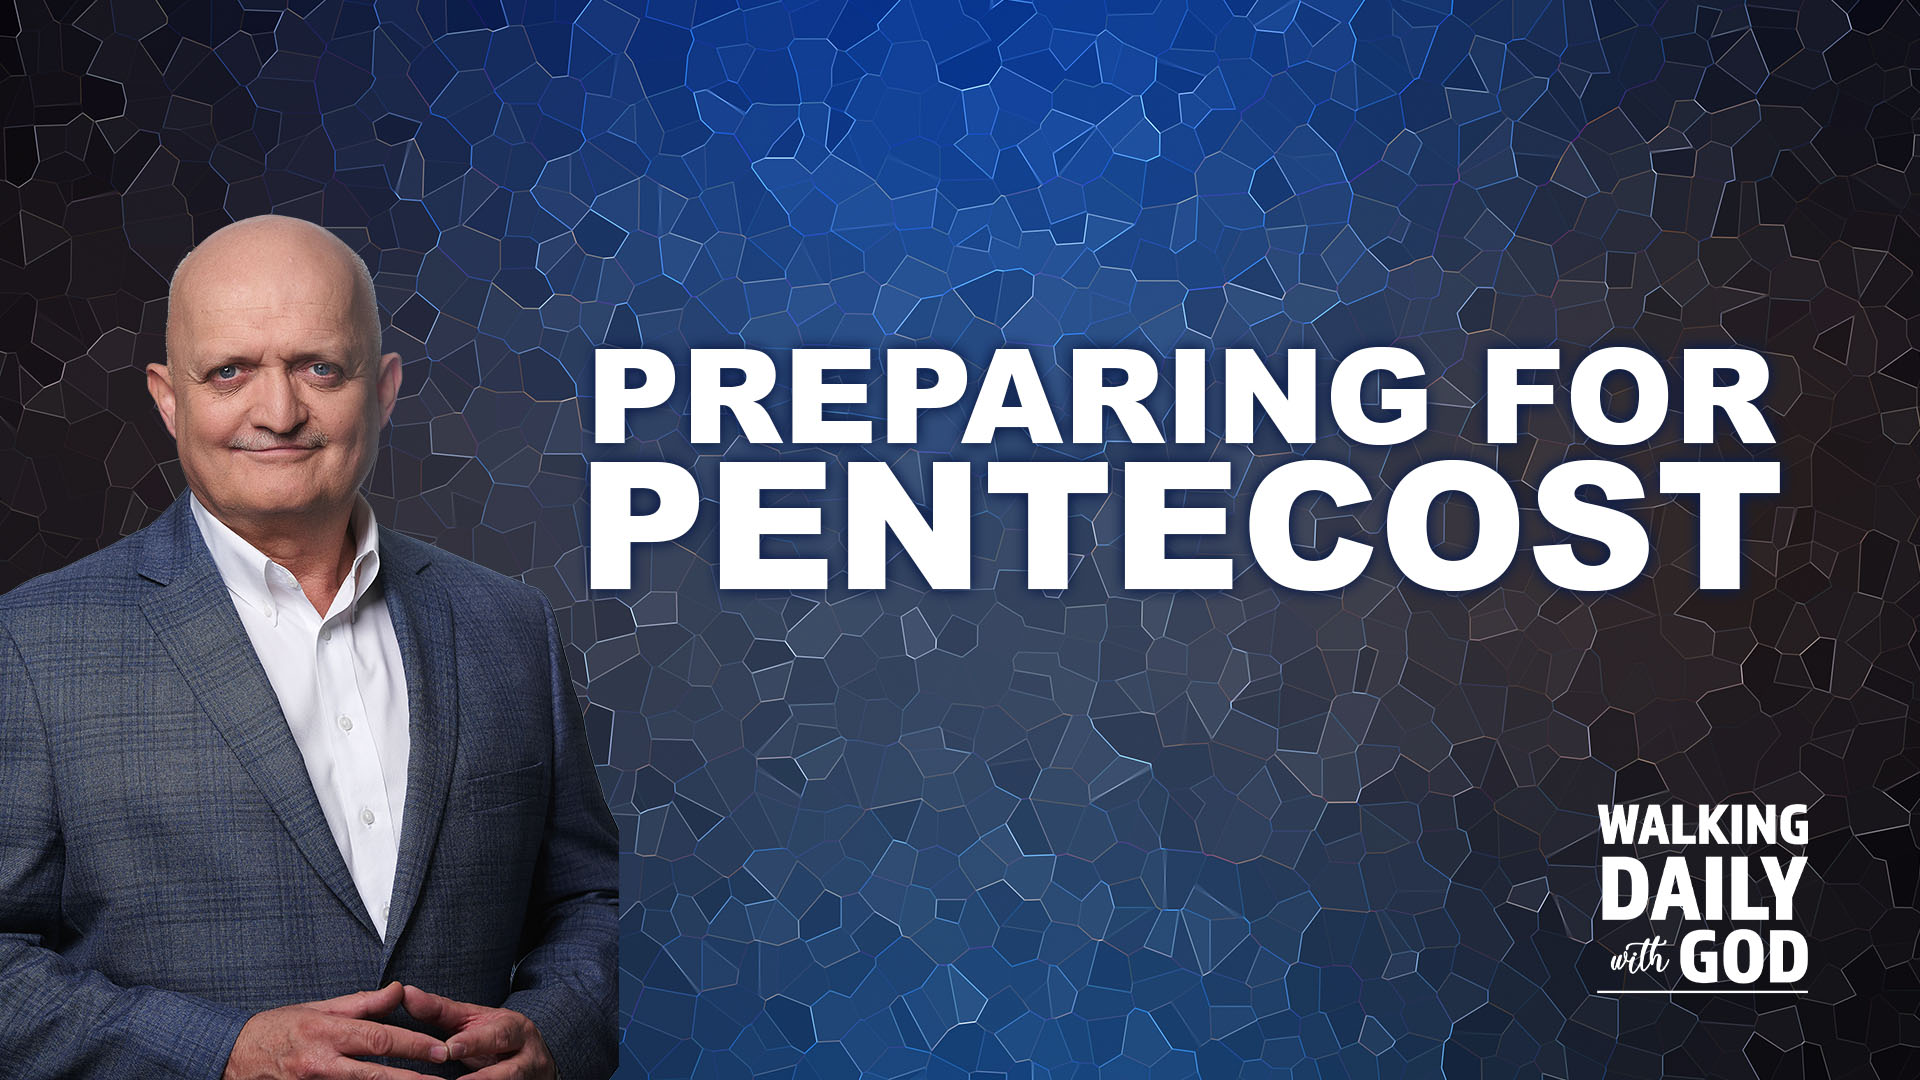 Preparing for Pentecost - The Spirit Comes